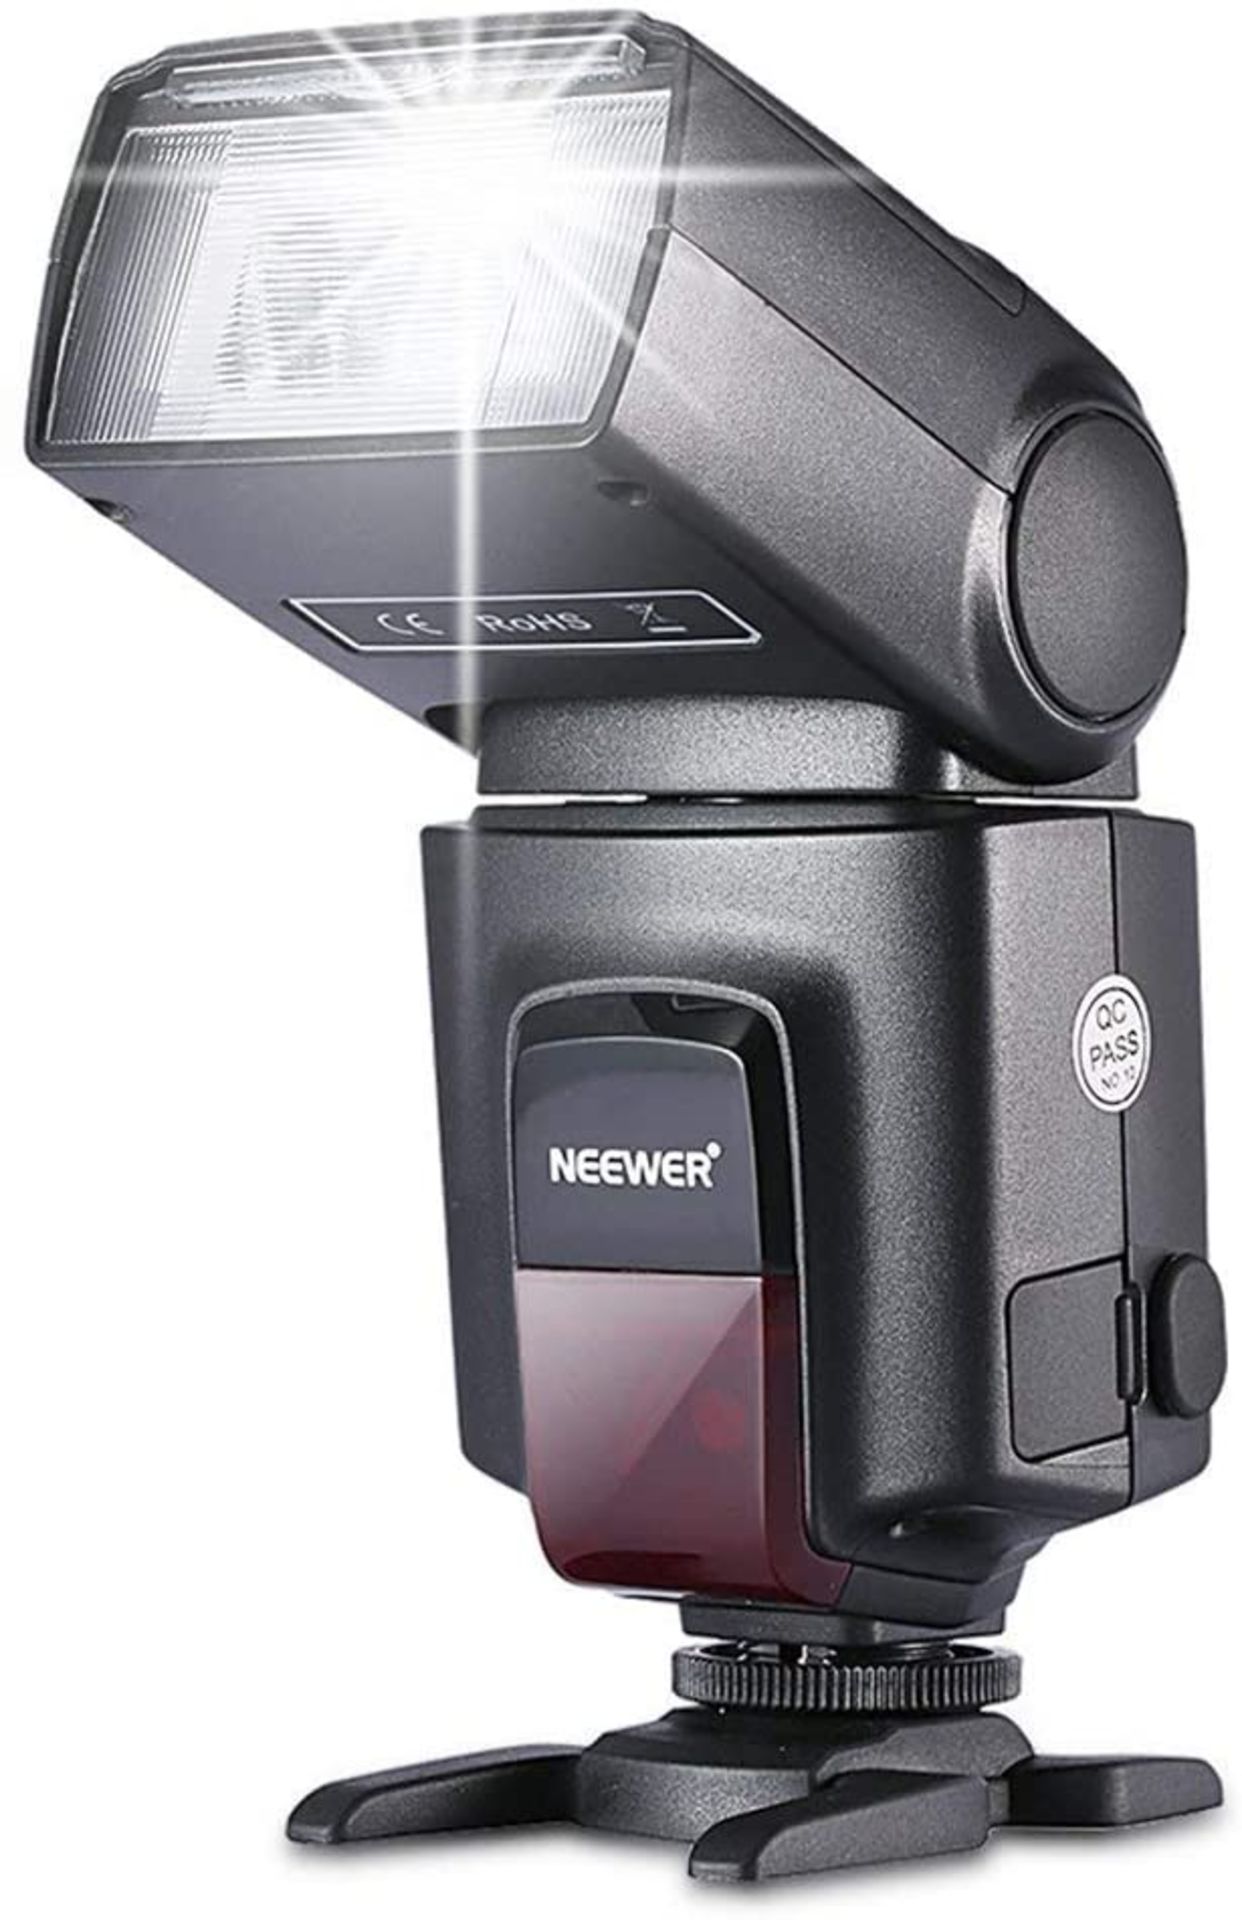 Neewer TT560 Flash Speedlite to Bag